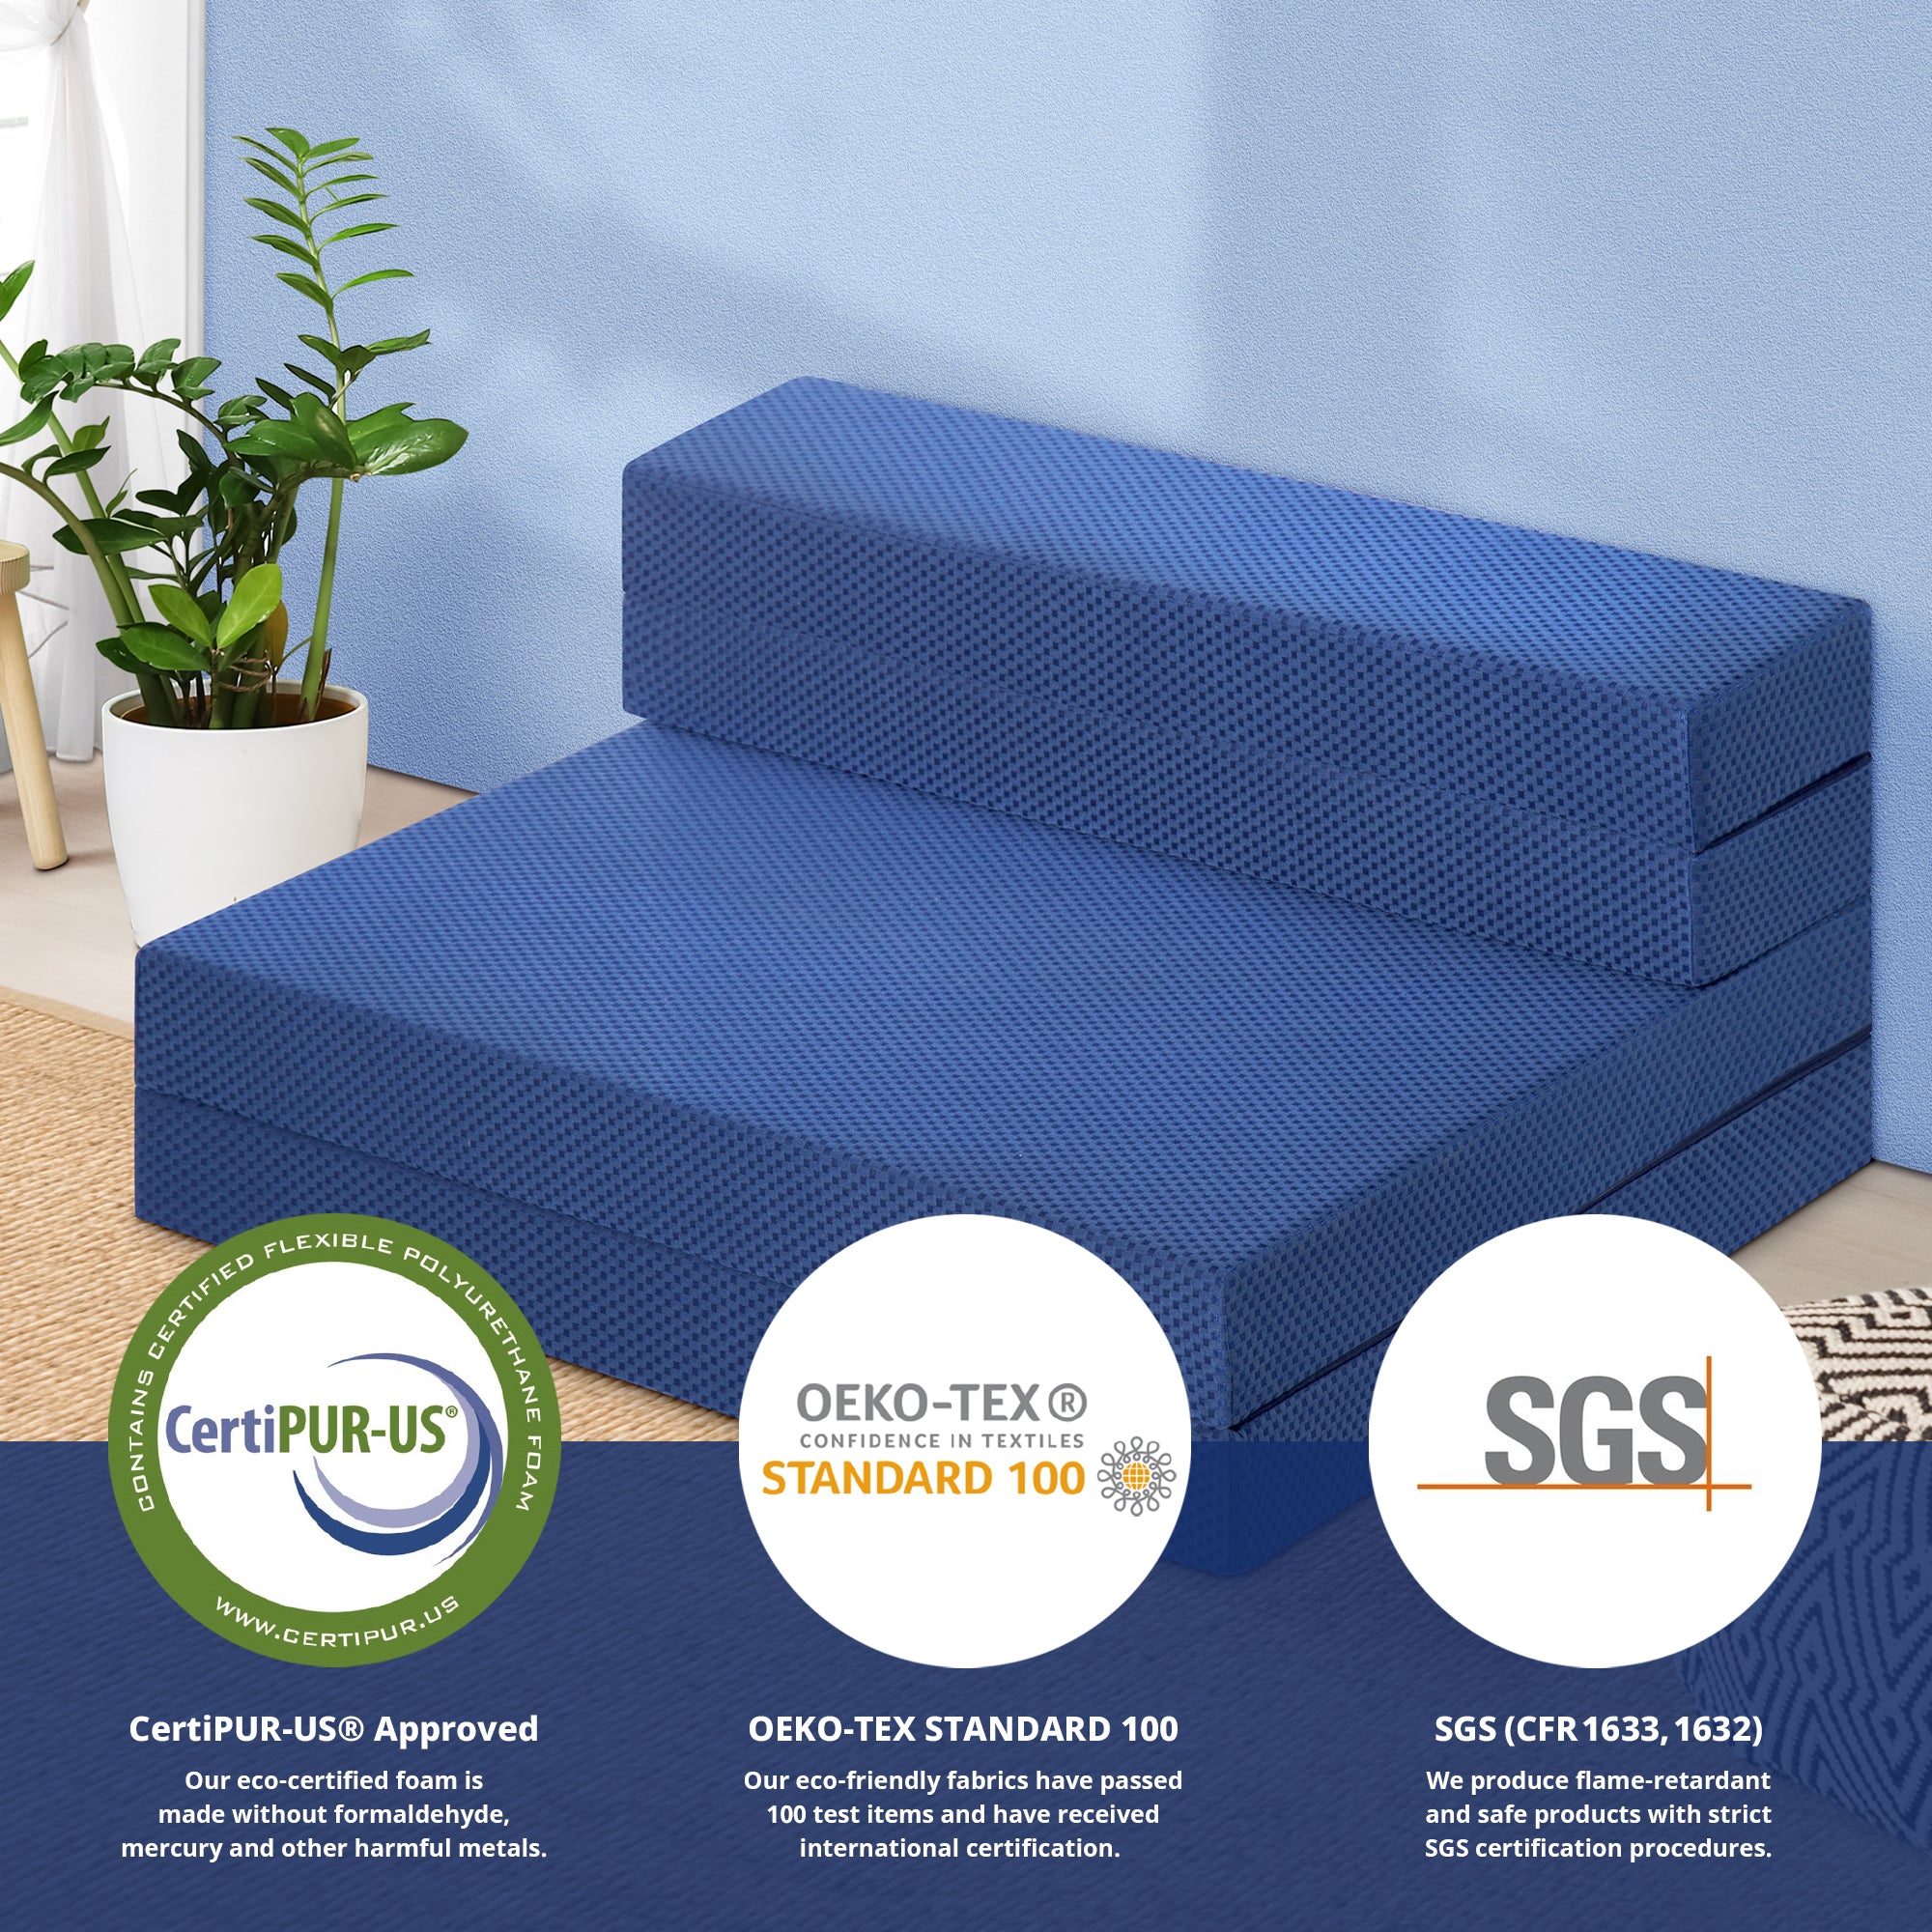 4 Inch Tri-Fold Multi-Functional I-Gel Infused Memory Foam Topper Sofa Bed